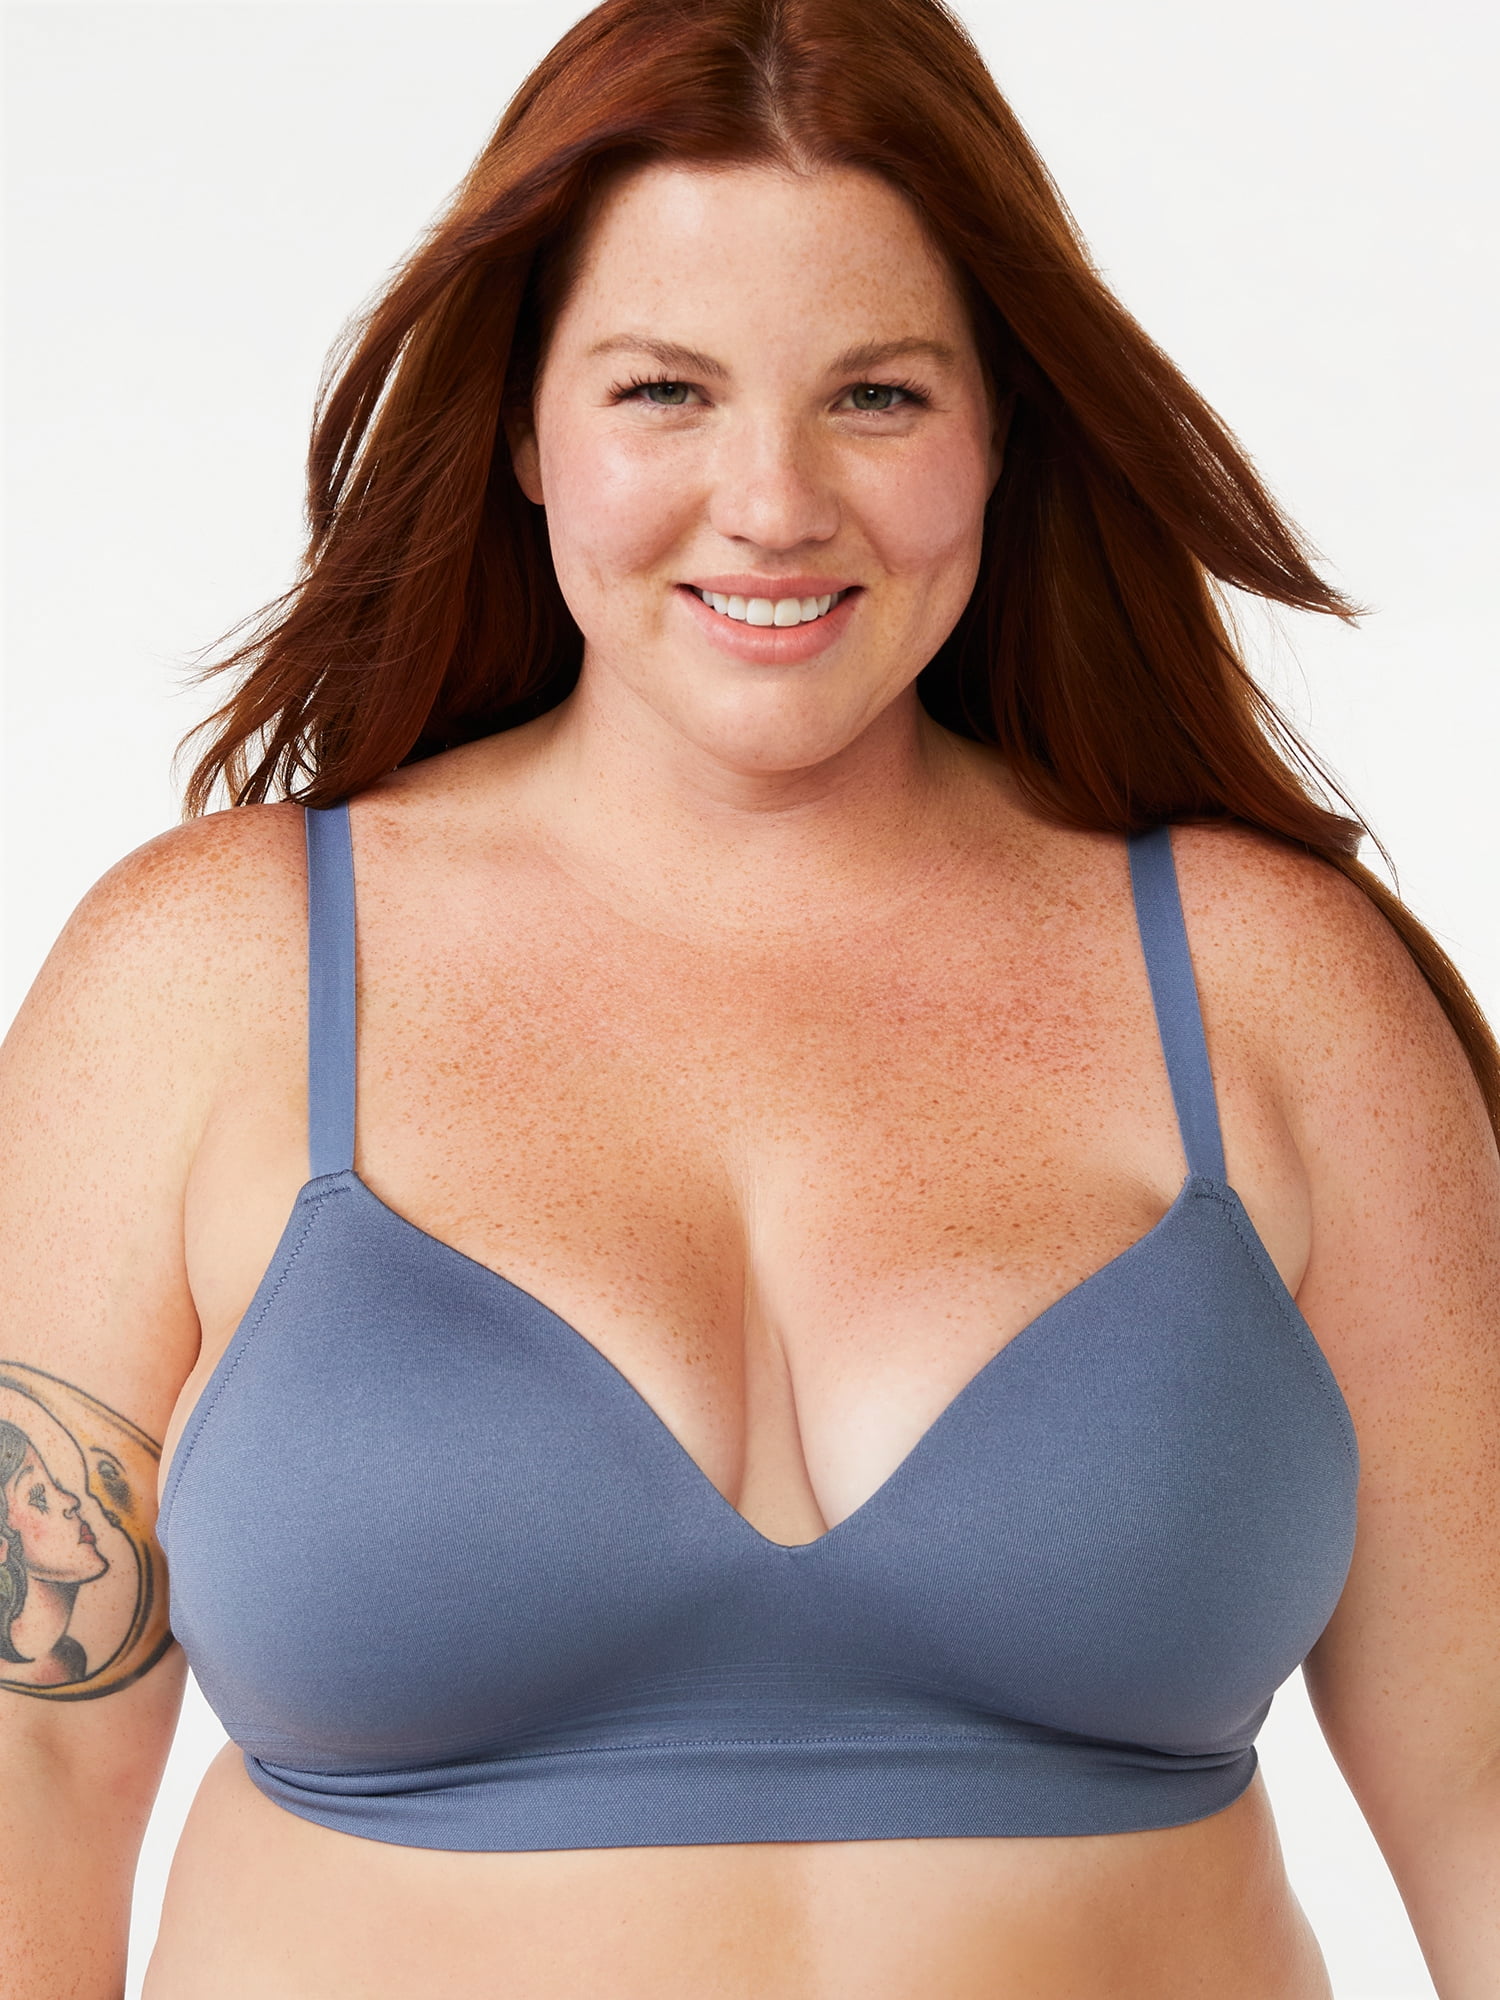 SJLS Bra for Big Breast Women Big Size Hot Wire Free Thin Soft